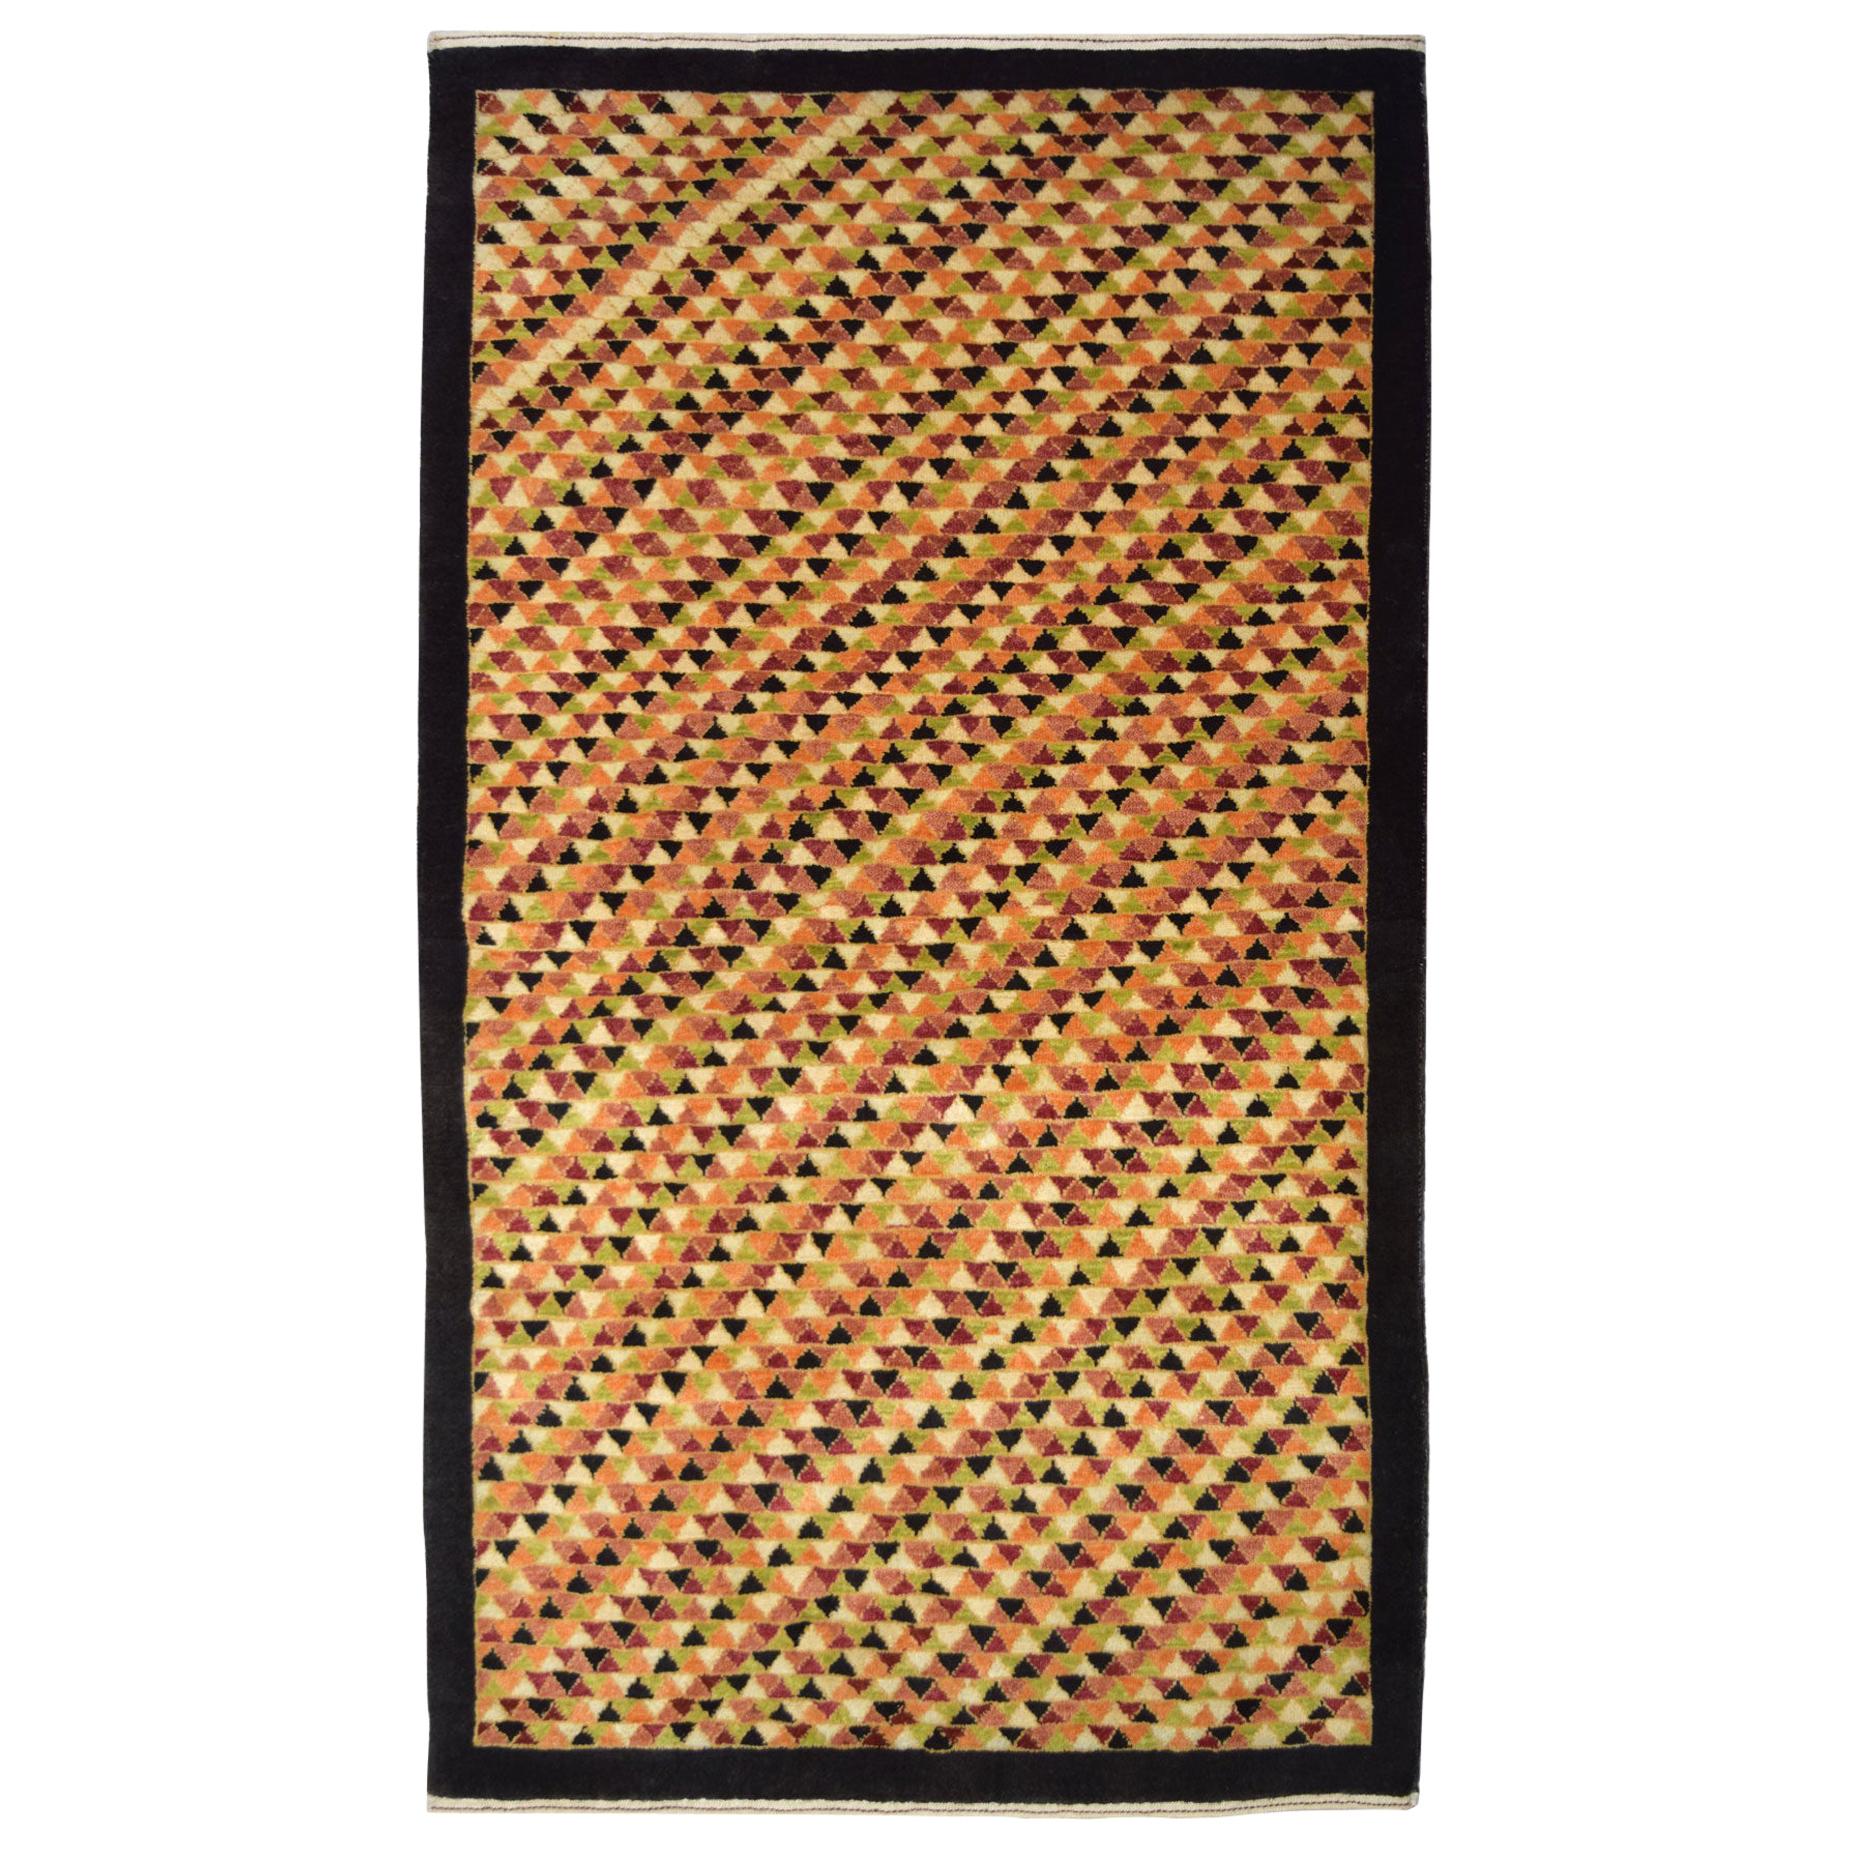 Orley Shabahang Contemporary Persian Ferehan Rug, Geometric, Wool, 3' x 5'